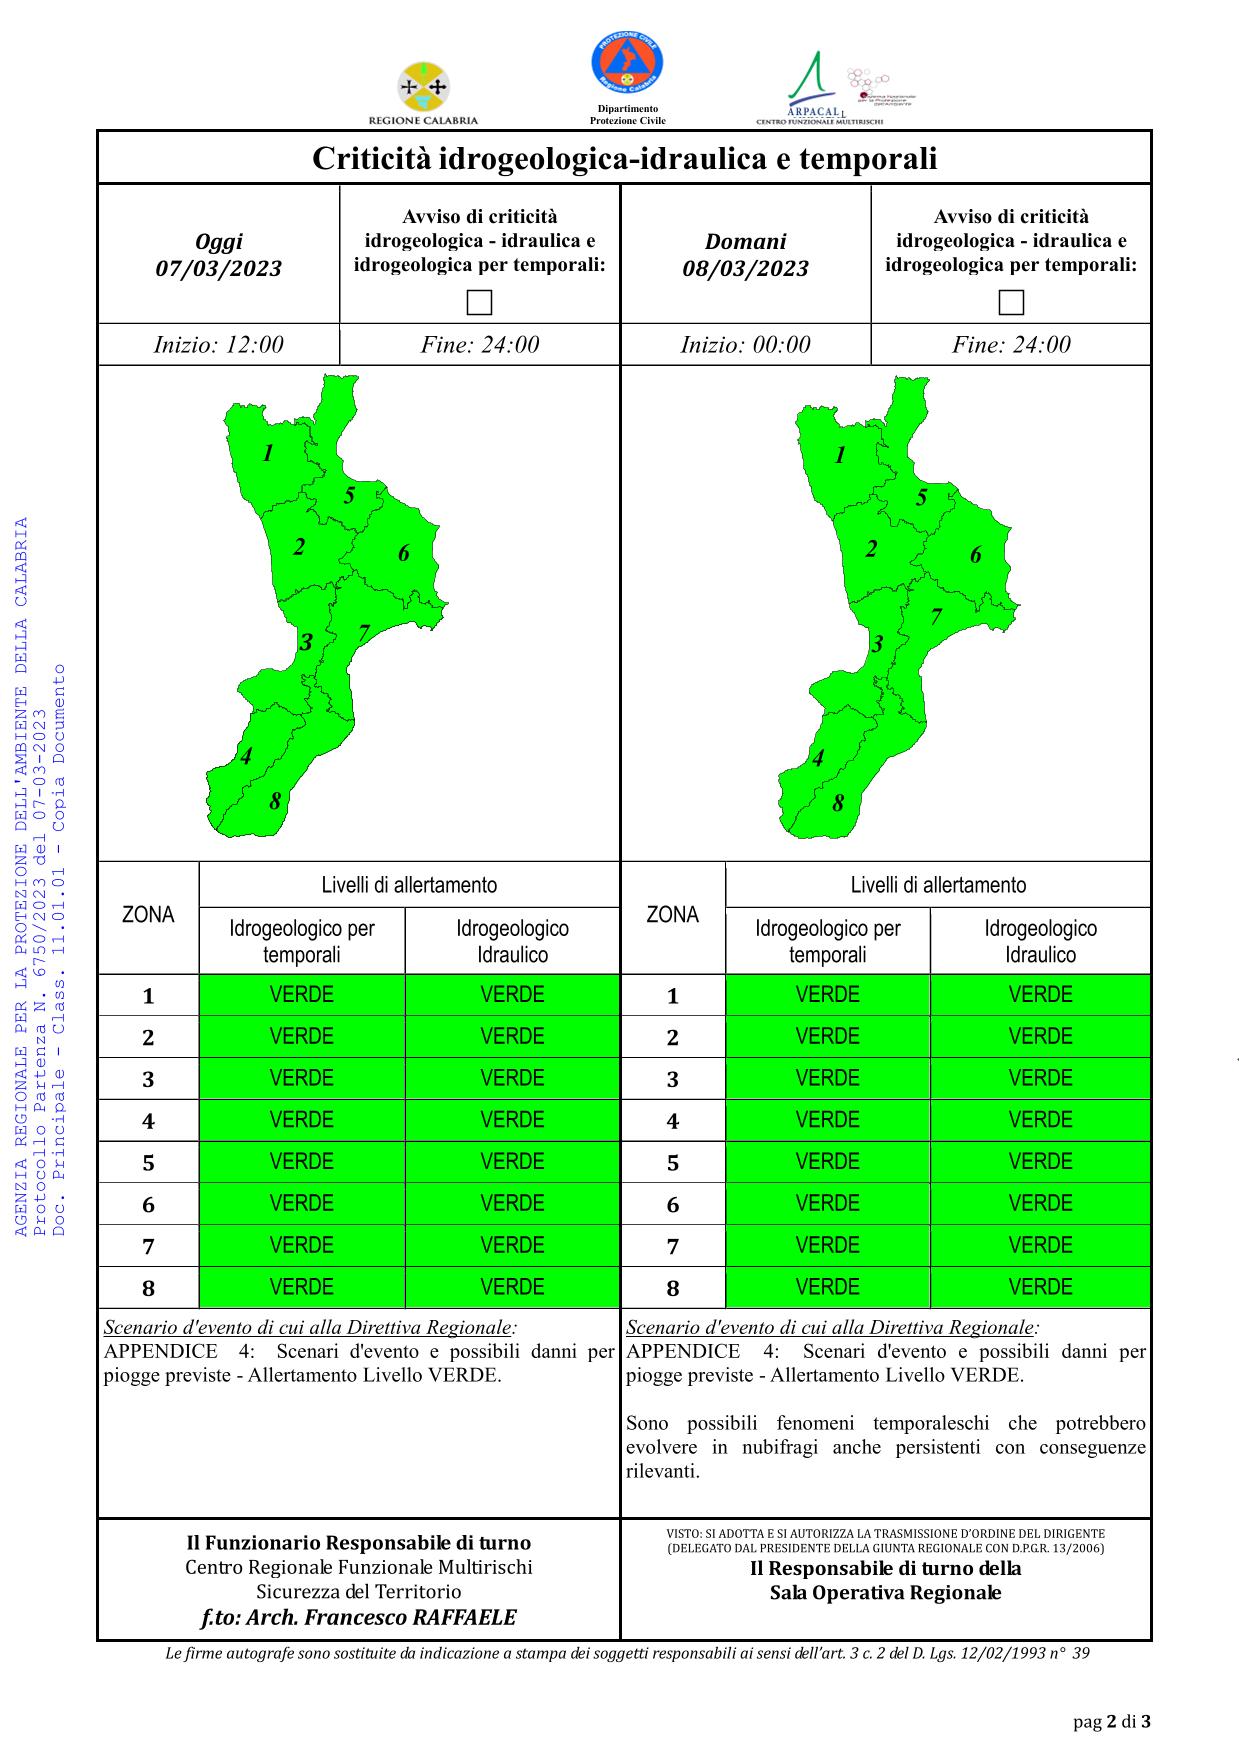 Criticità idrogeologica-idraulica e temporali in Calabria 07-03-2023